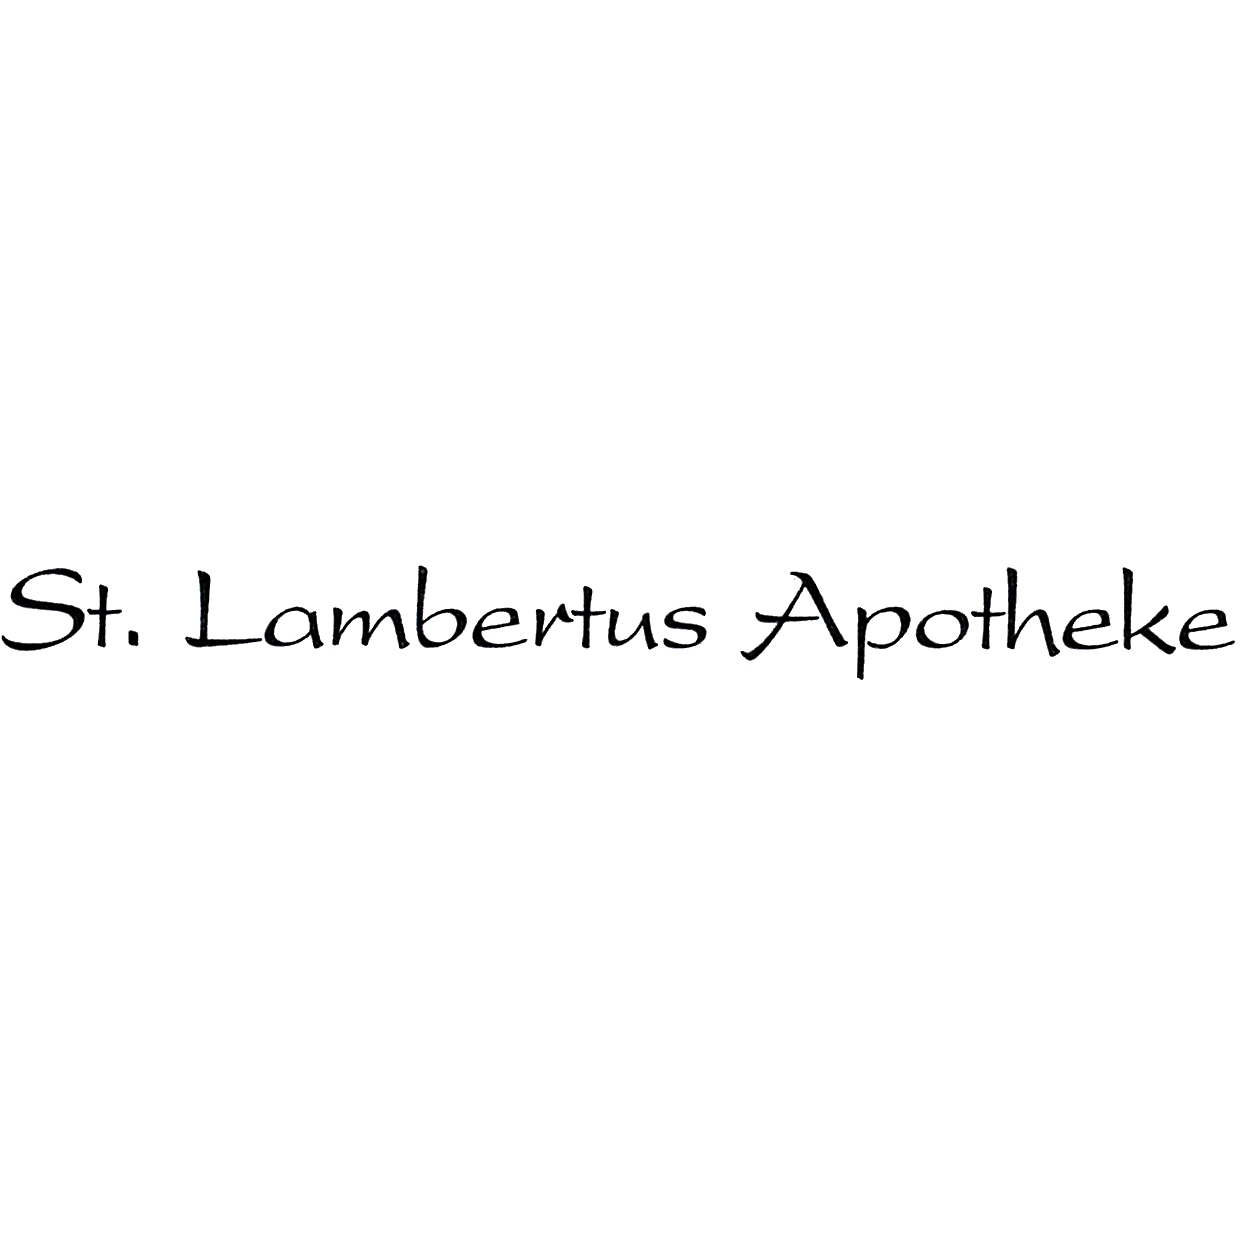 St. Lambertus-Apotheke in Bad Schönborn - Logo